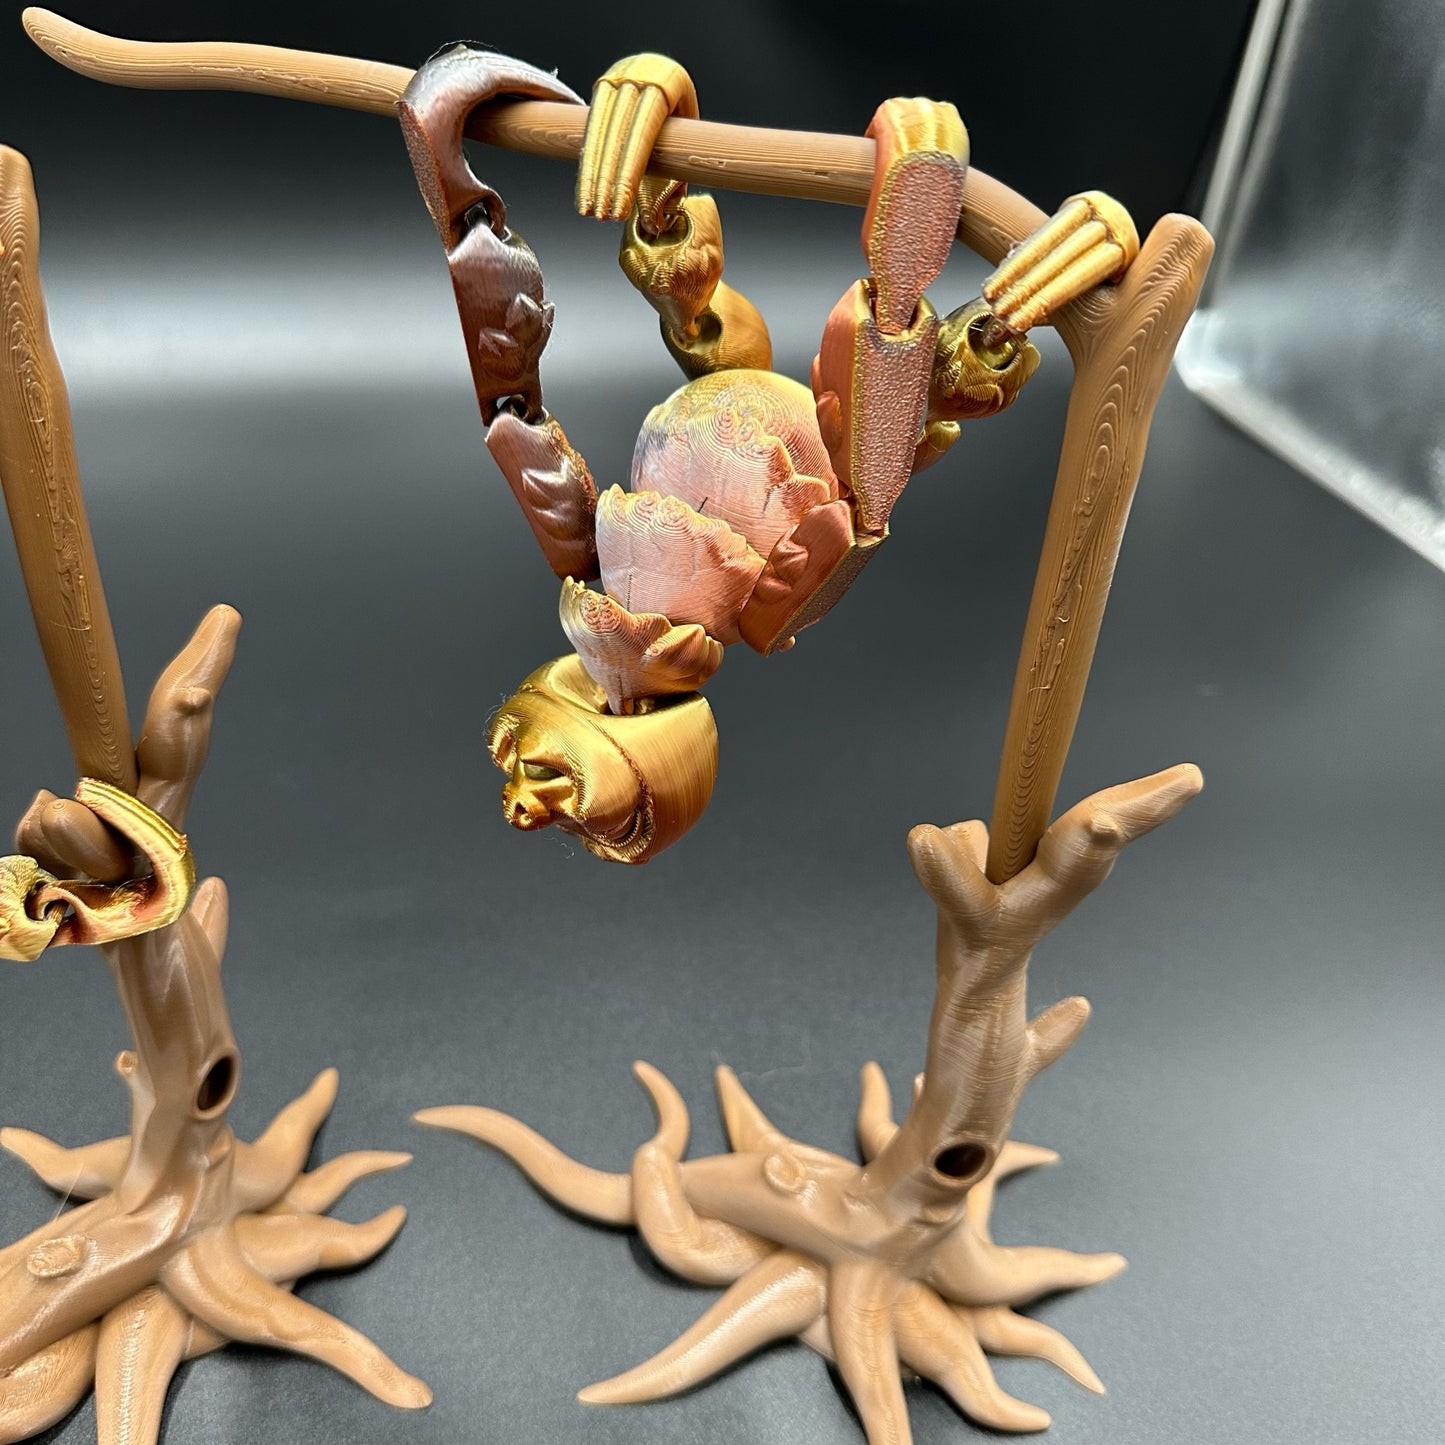 3D Printed Swinging Sloth